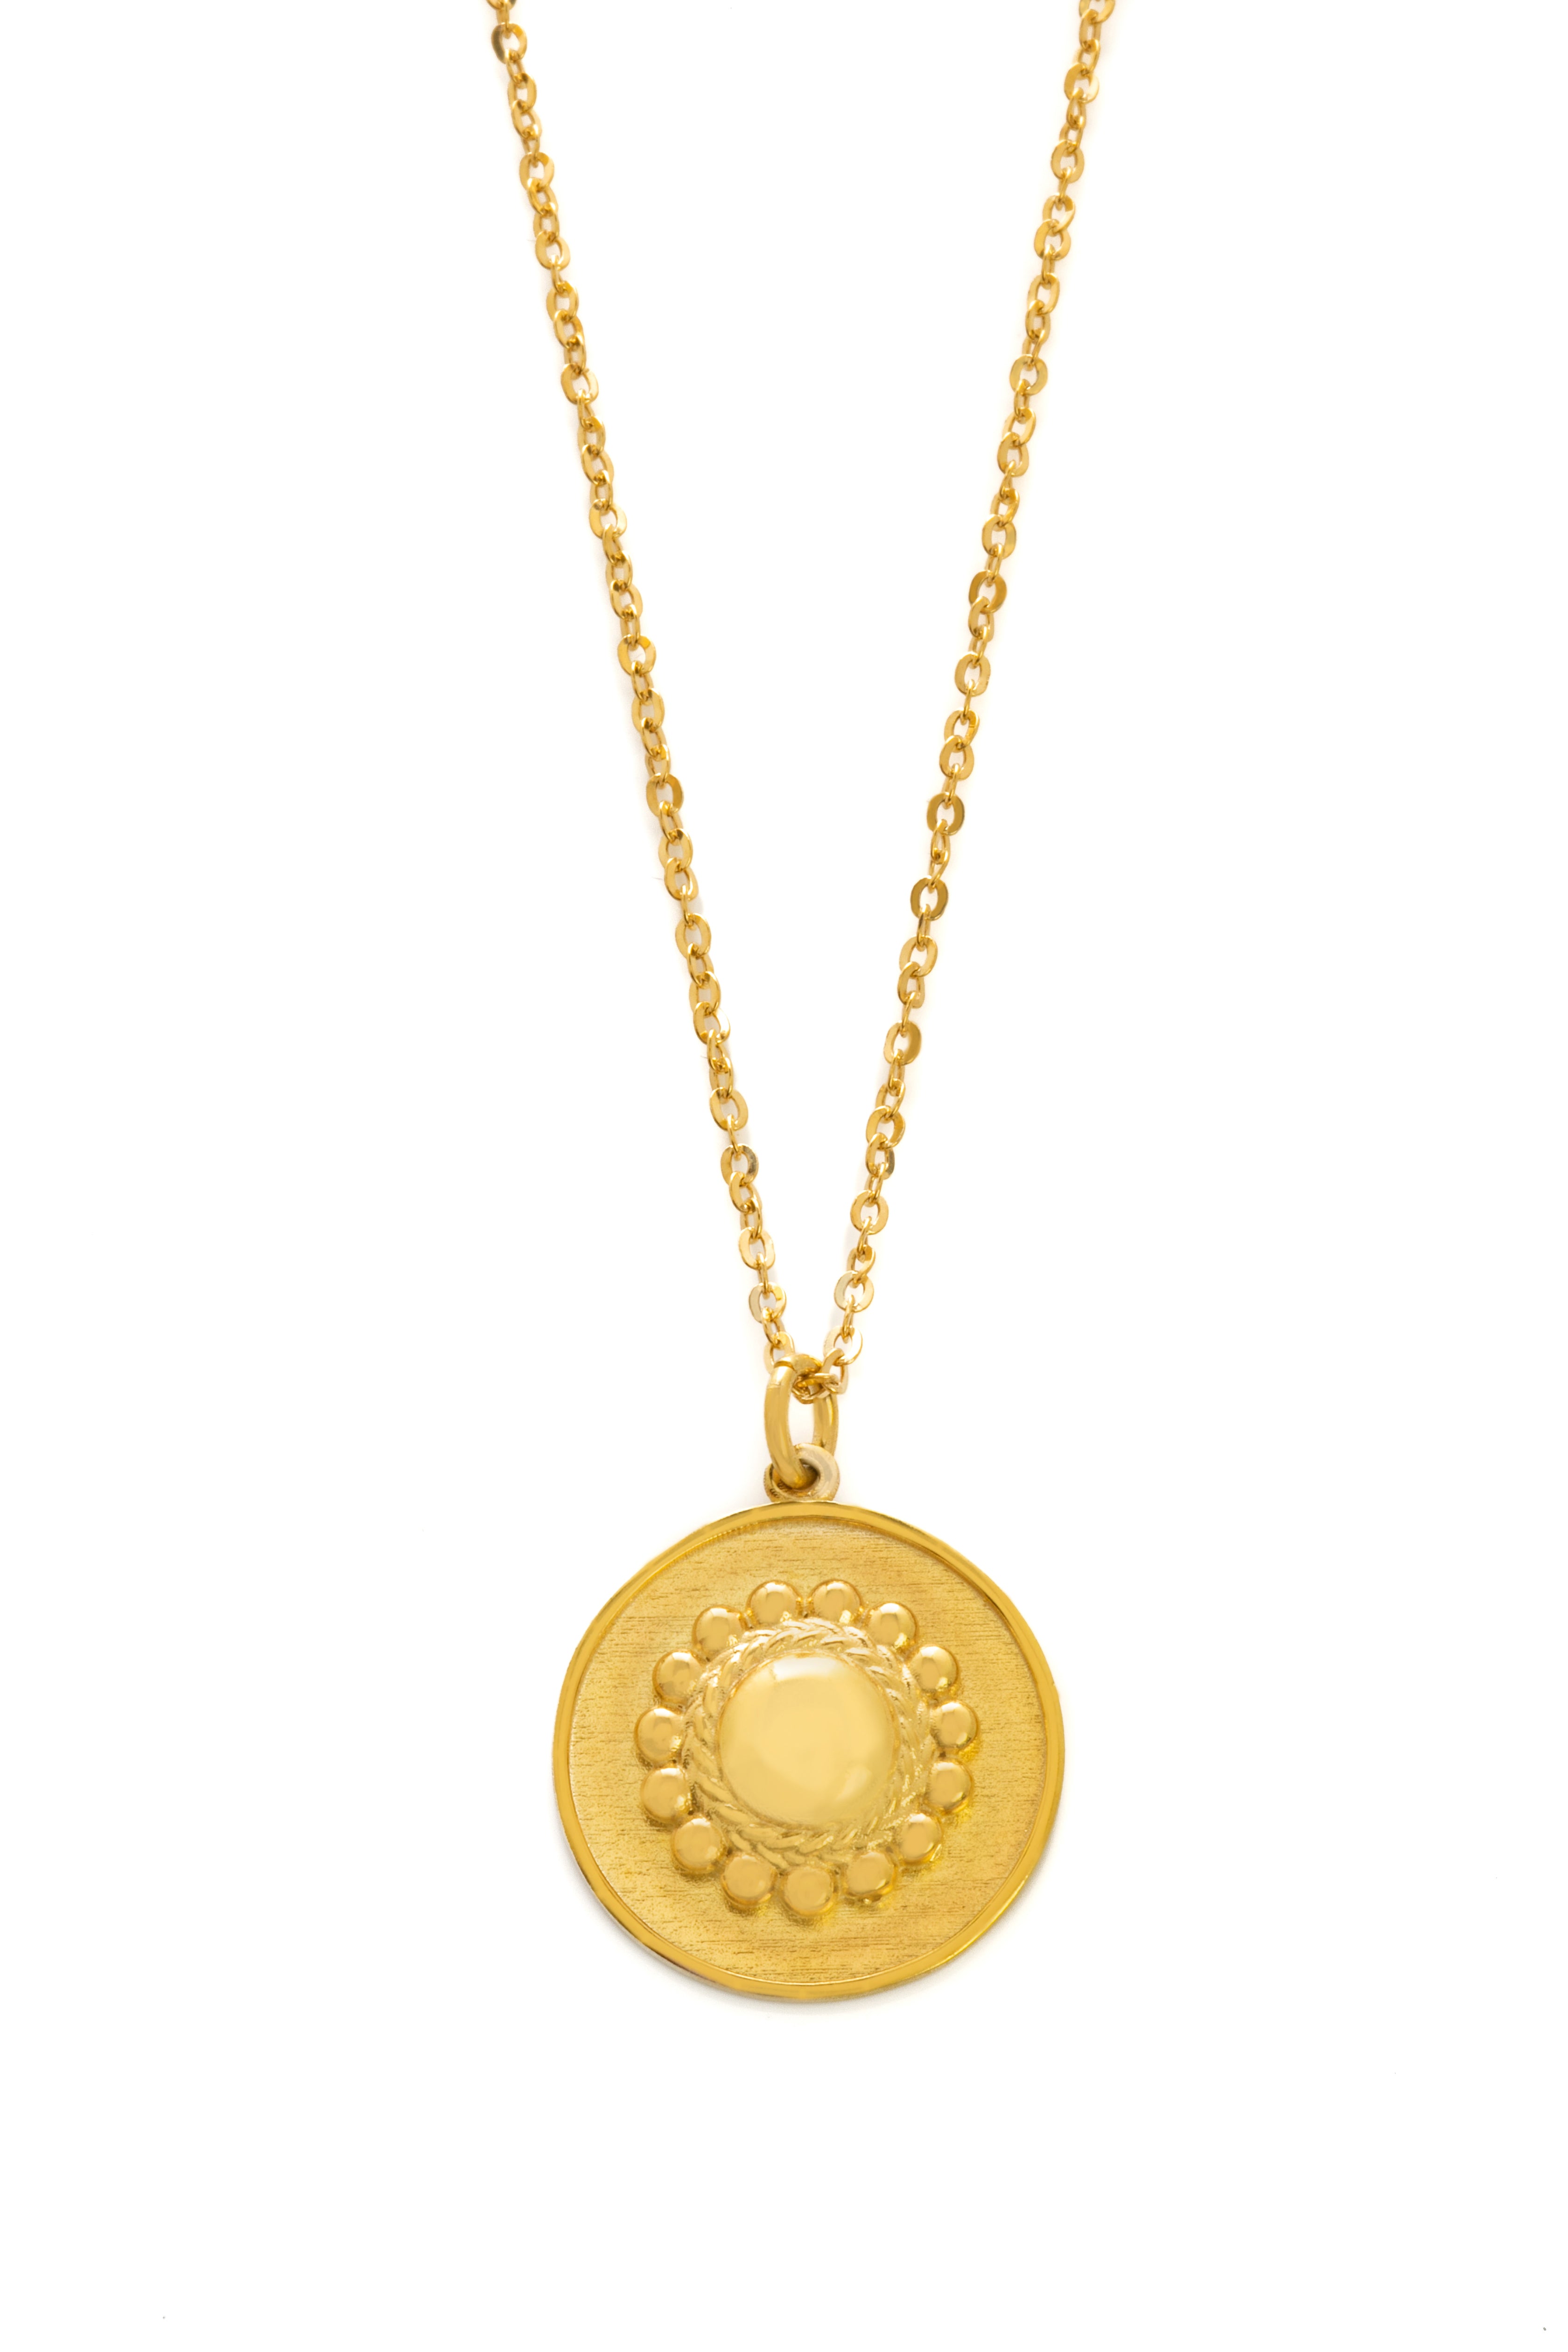 Myrsini pendant silver 925° gold plated 22k° by Pearl Martini